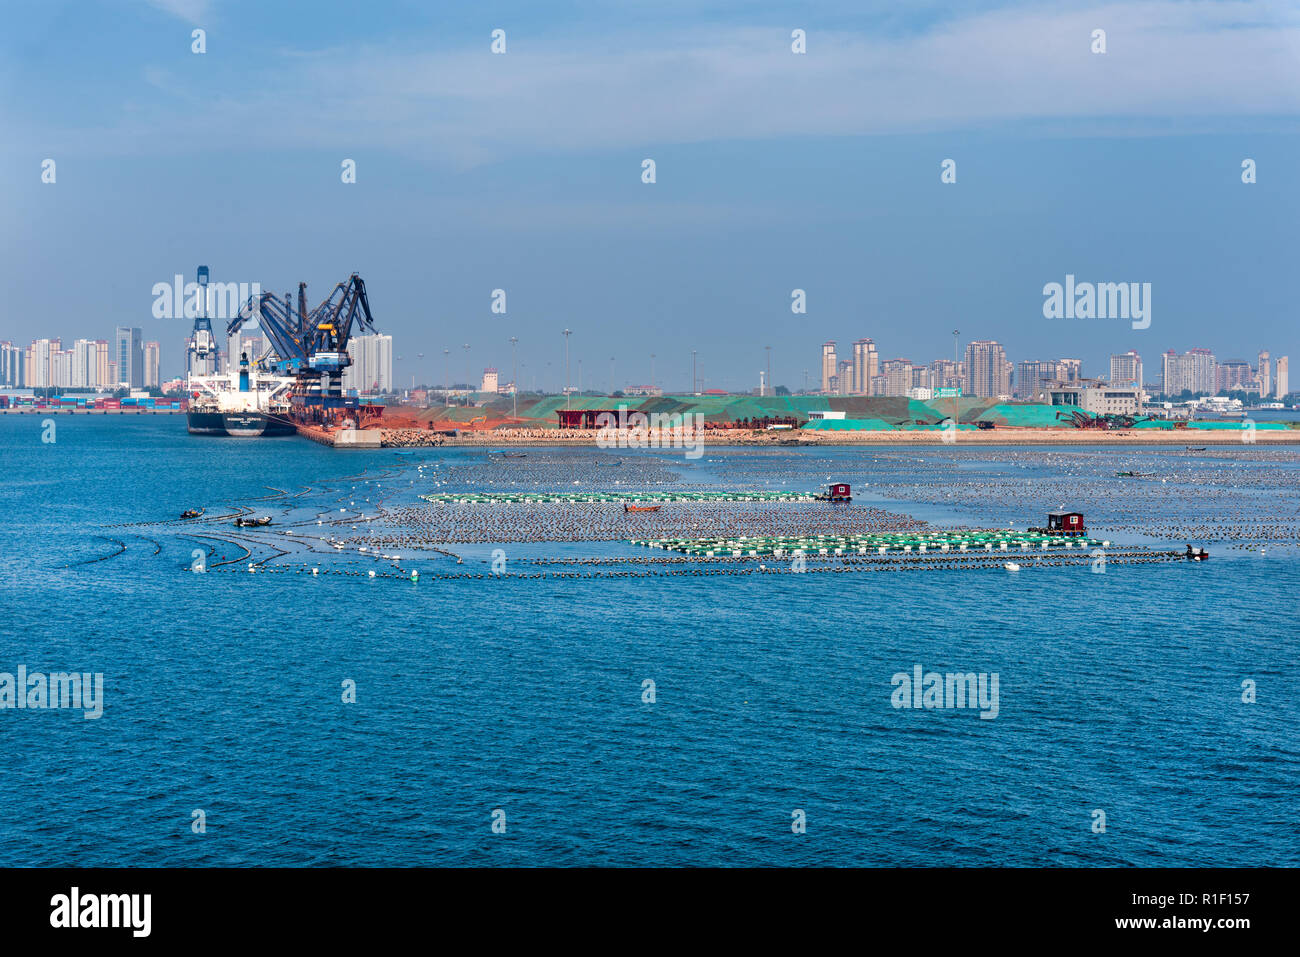 YANTAI, Provinz Shandong, China - 21 May 2018: Bulk Carrier, Winning Zephyr entladen Bauxit aus Guinea, an der Art.Nr. 318 Bauxit Anlegeplatz in West Yantai Port Stockfoto